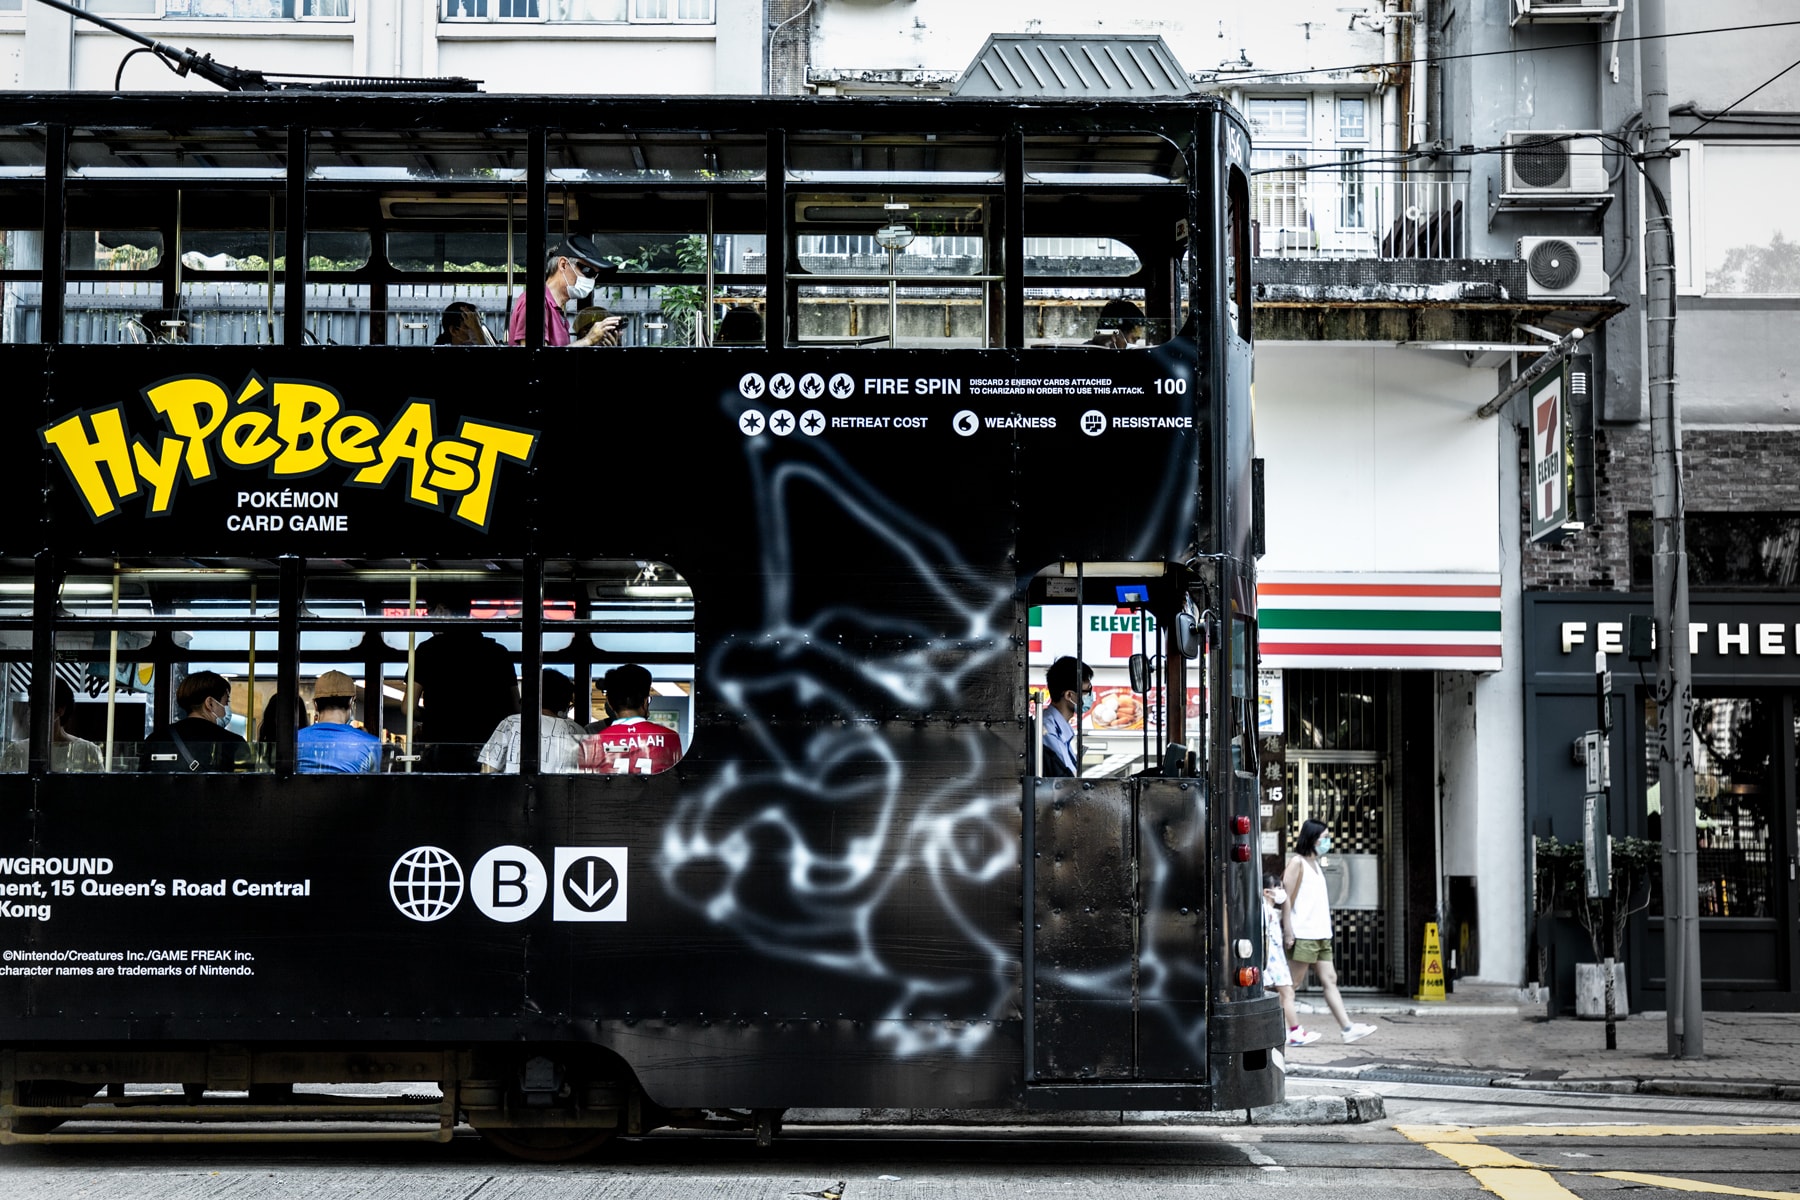 Pokemon TCG 25 x HYPEBEAST Tram and Poster charizard Hong Kong tcg BELOWGROUND SINO CENTER 